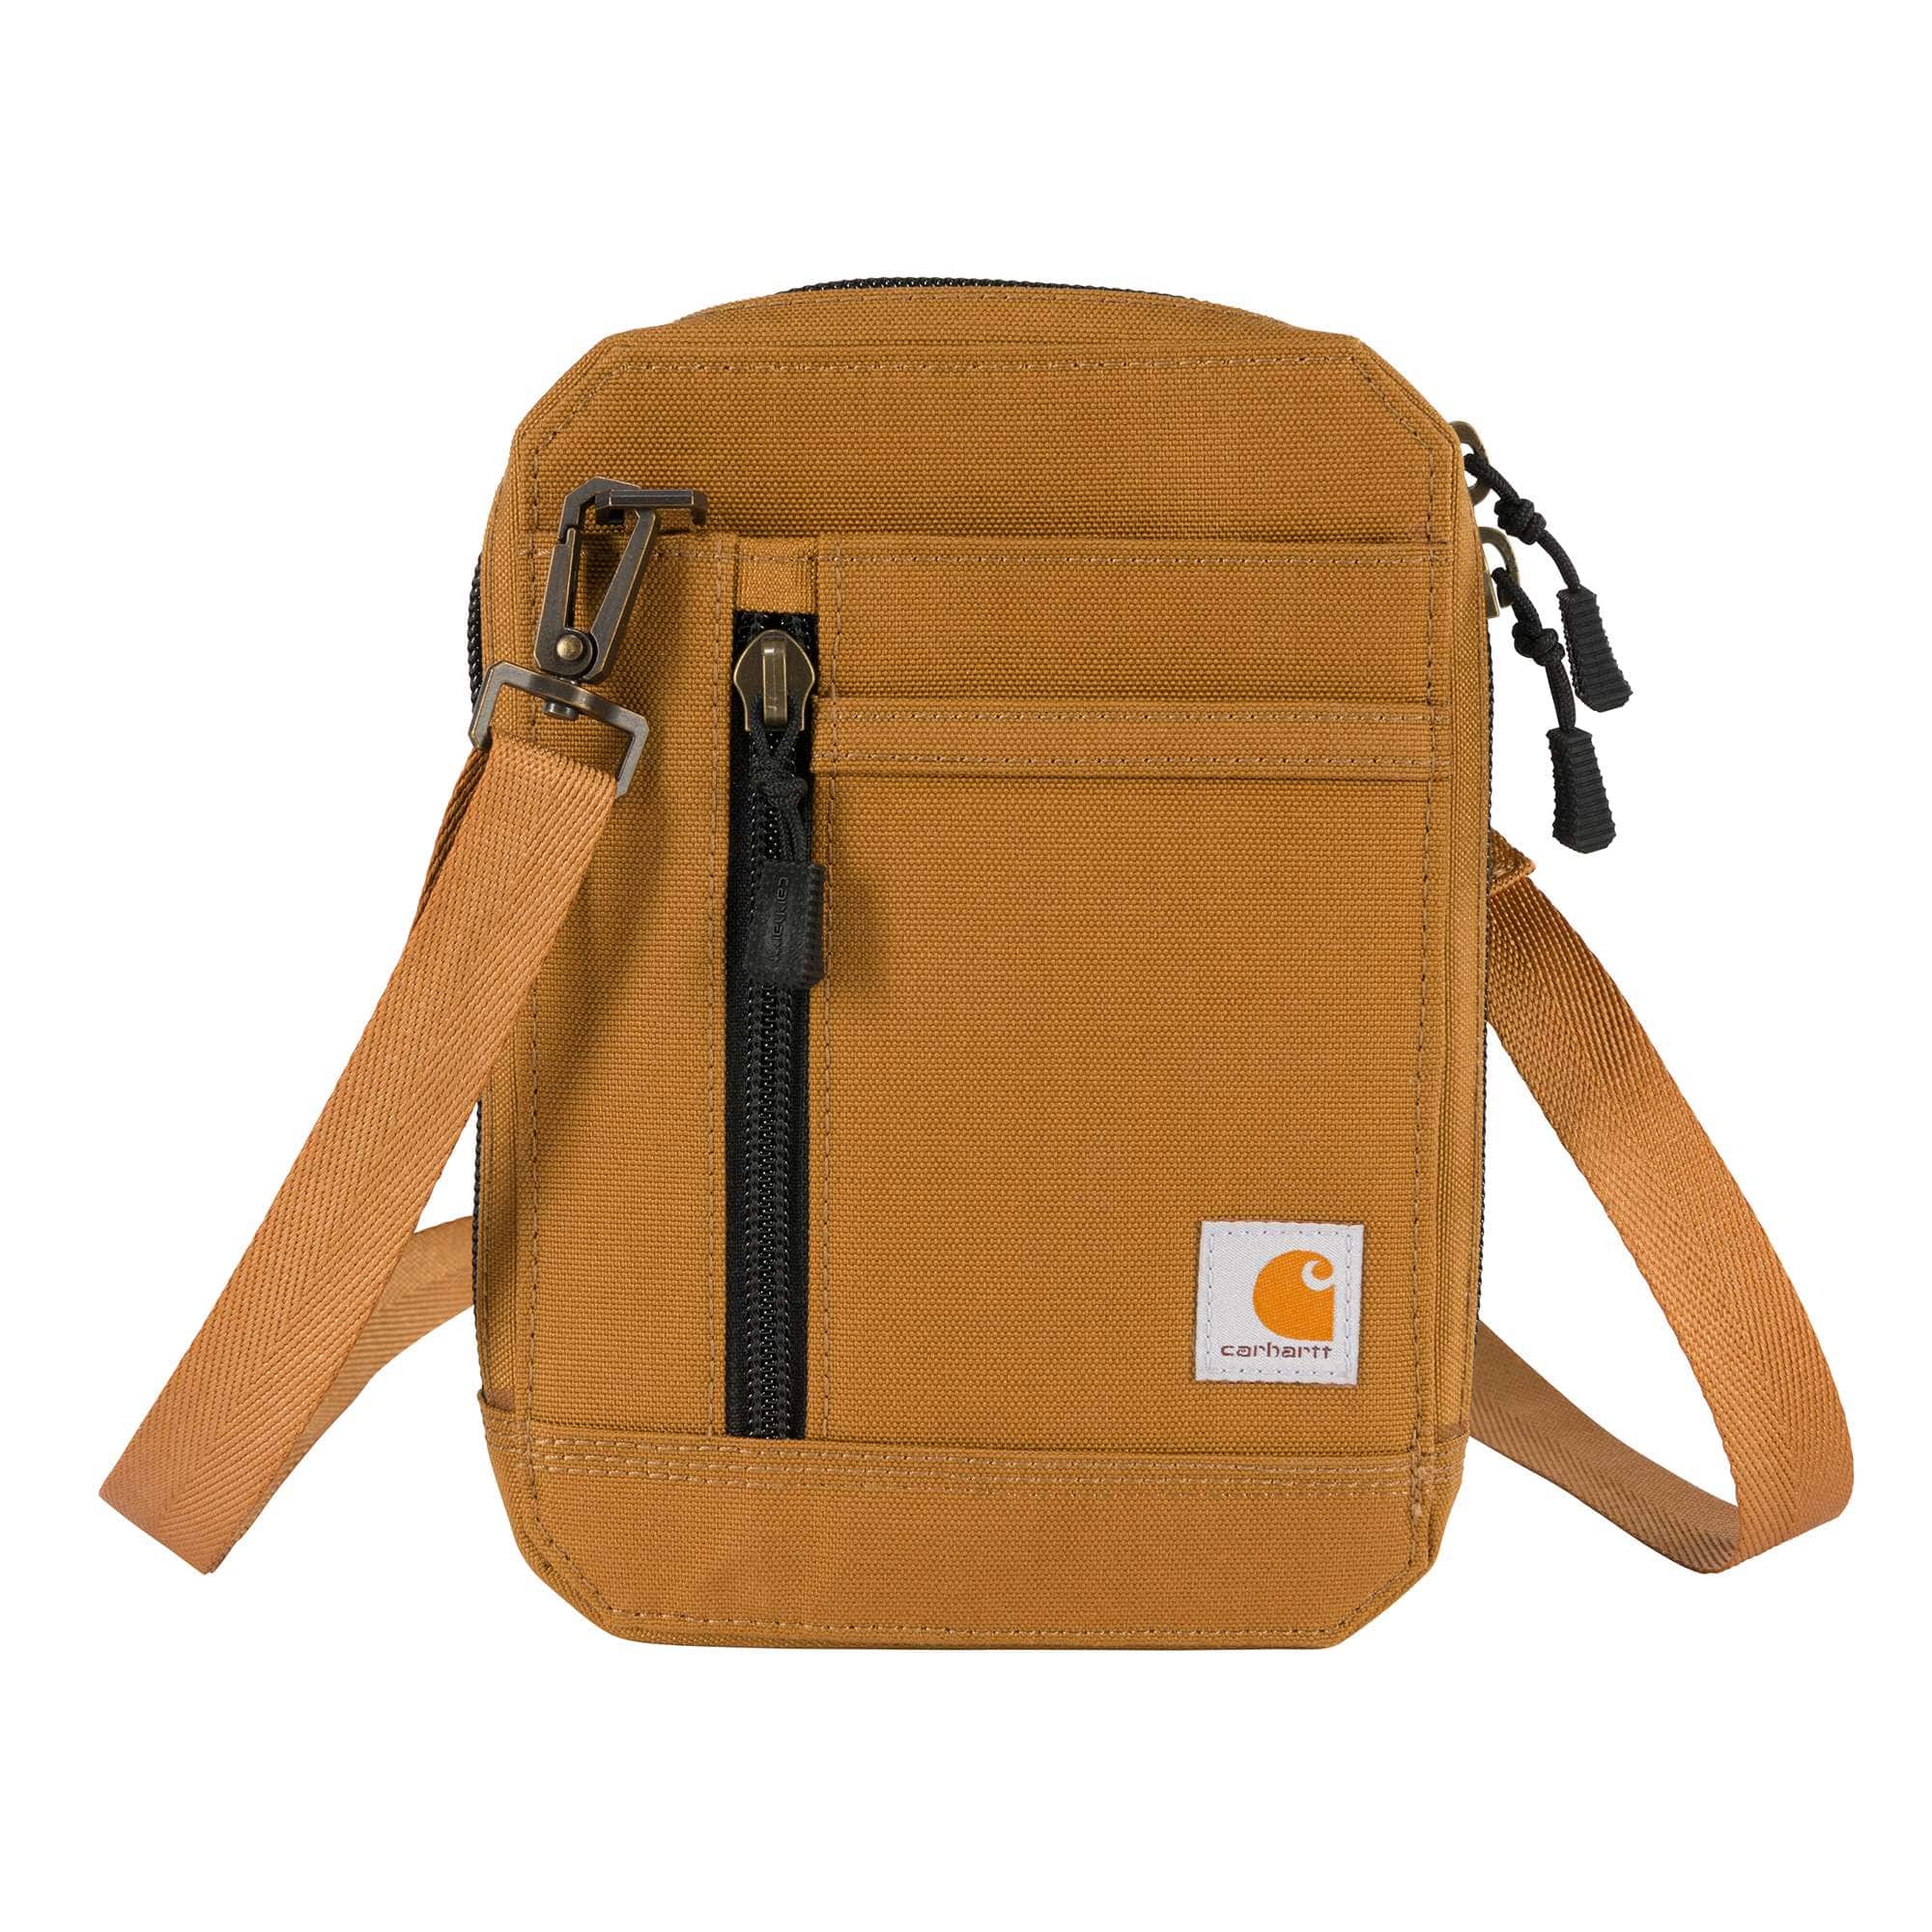 Carhartt, Durable, Adjustable Crossbody Bag with Flap Over Snap Closure